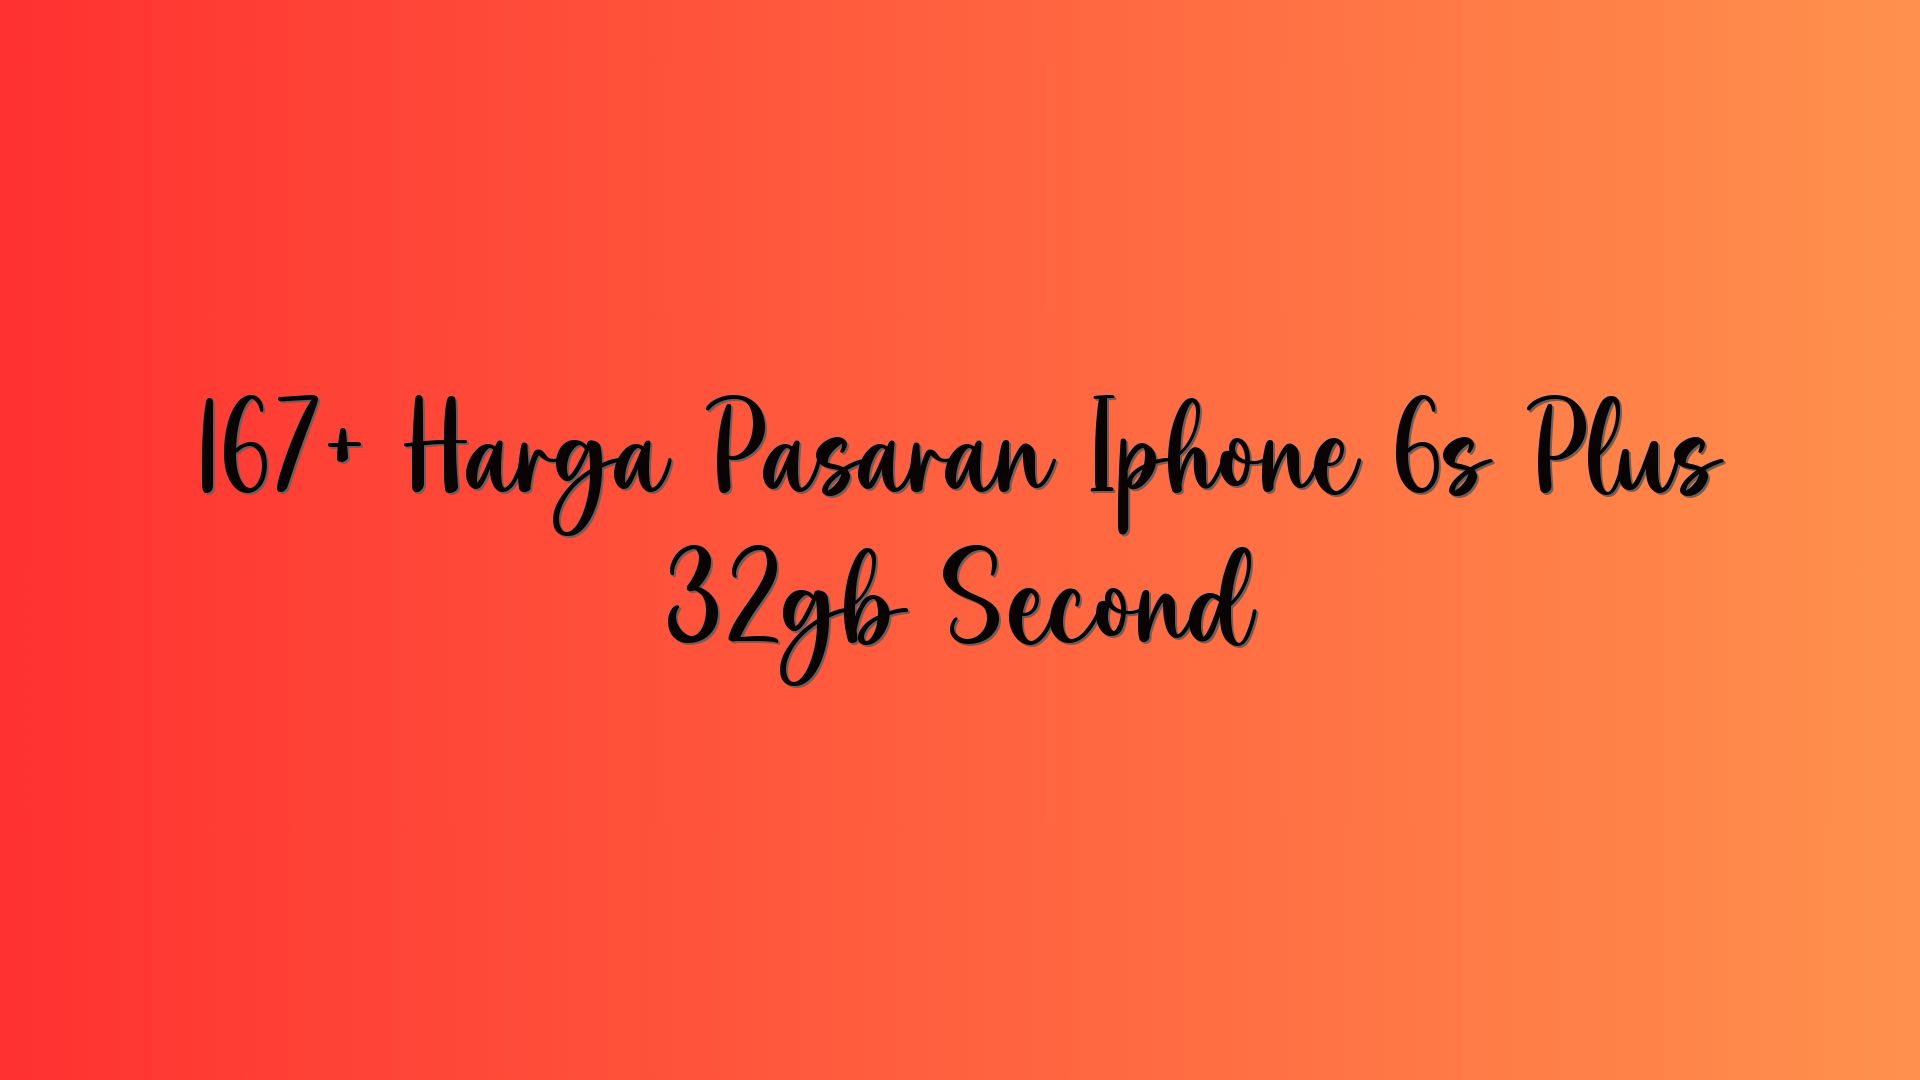 167+ Harga Pasaran Iphone 6s Plus 32gb Second